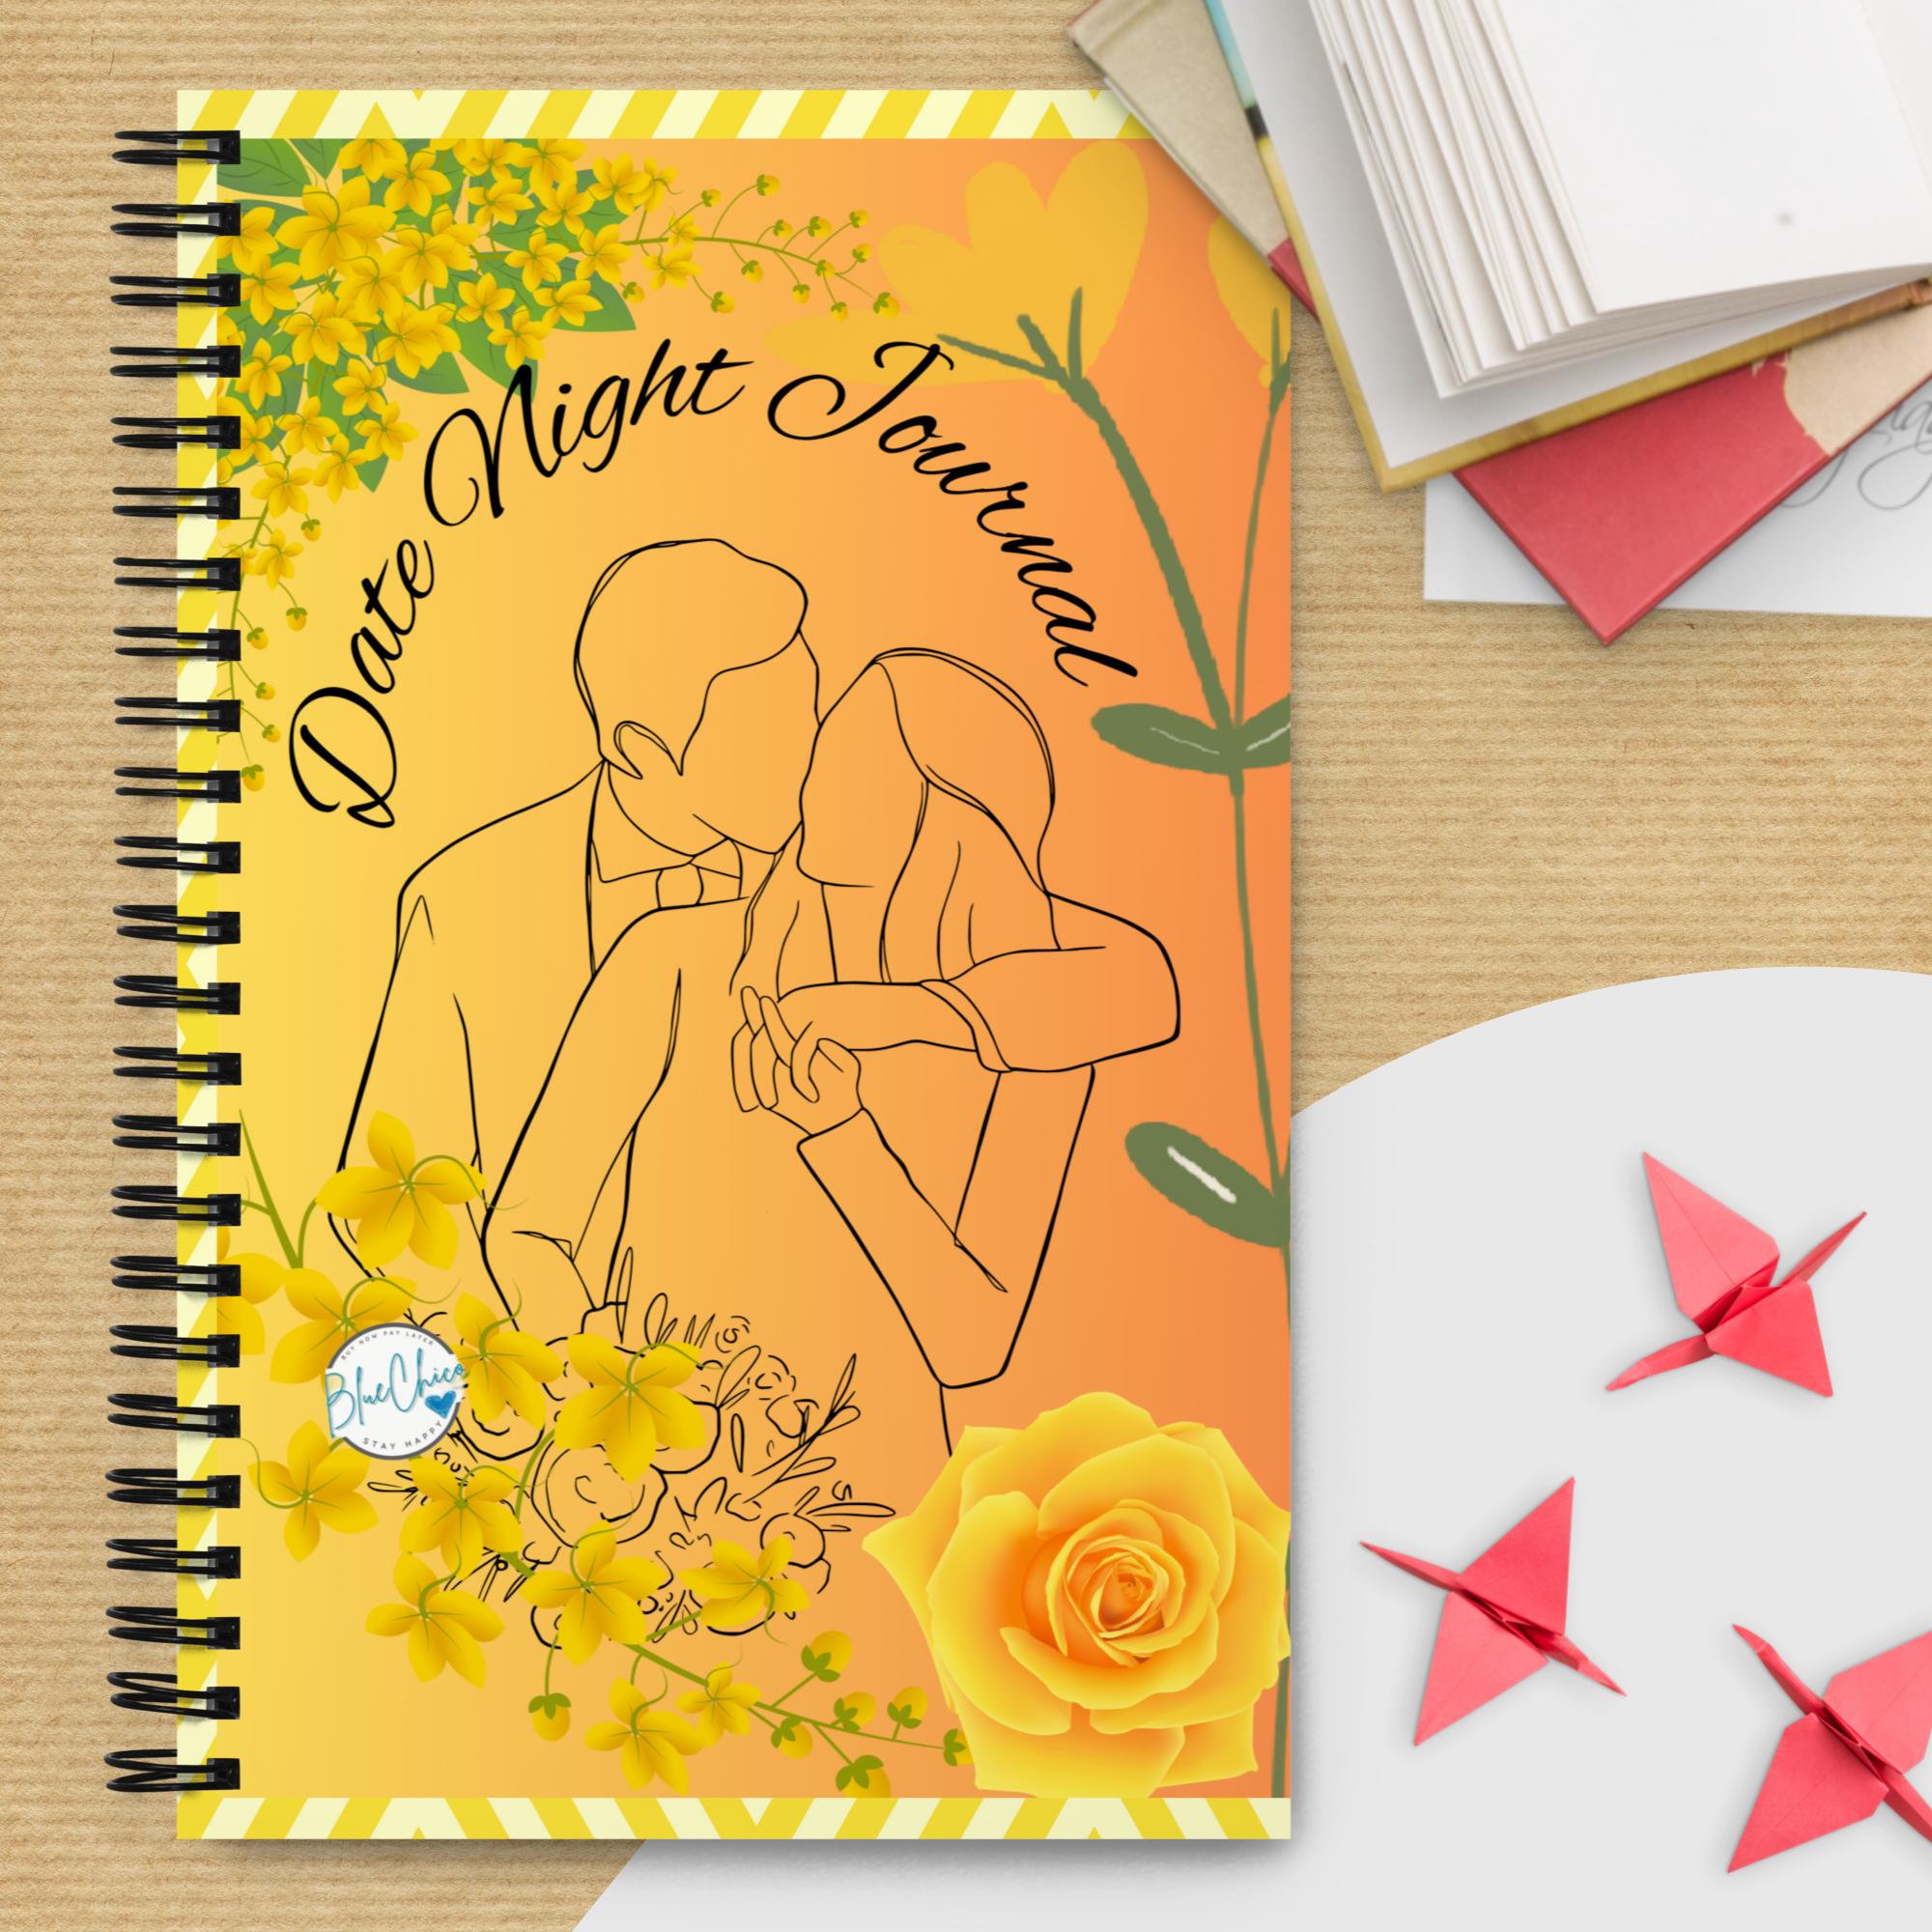 Date Night Journal in Yellow Tones